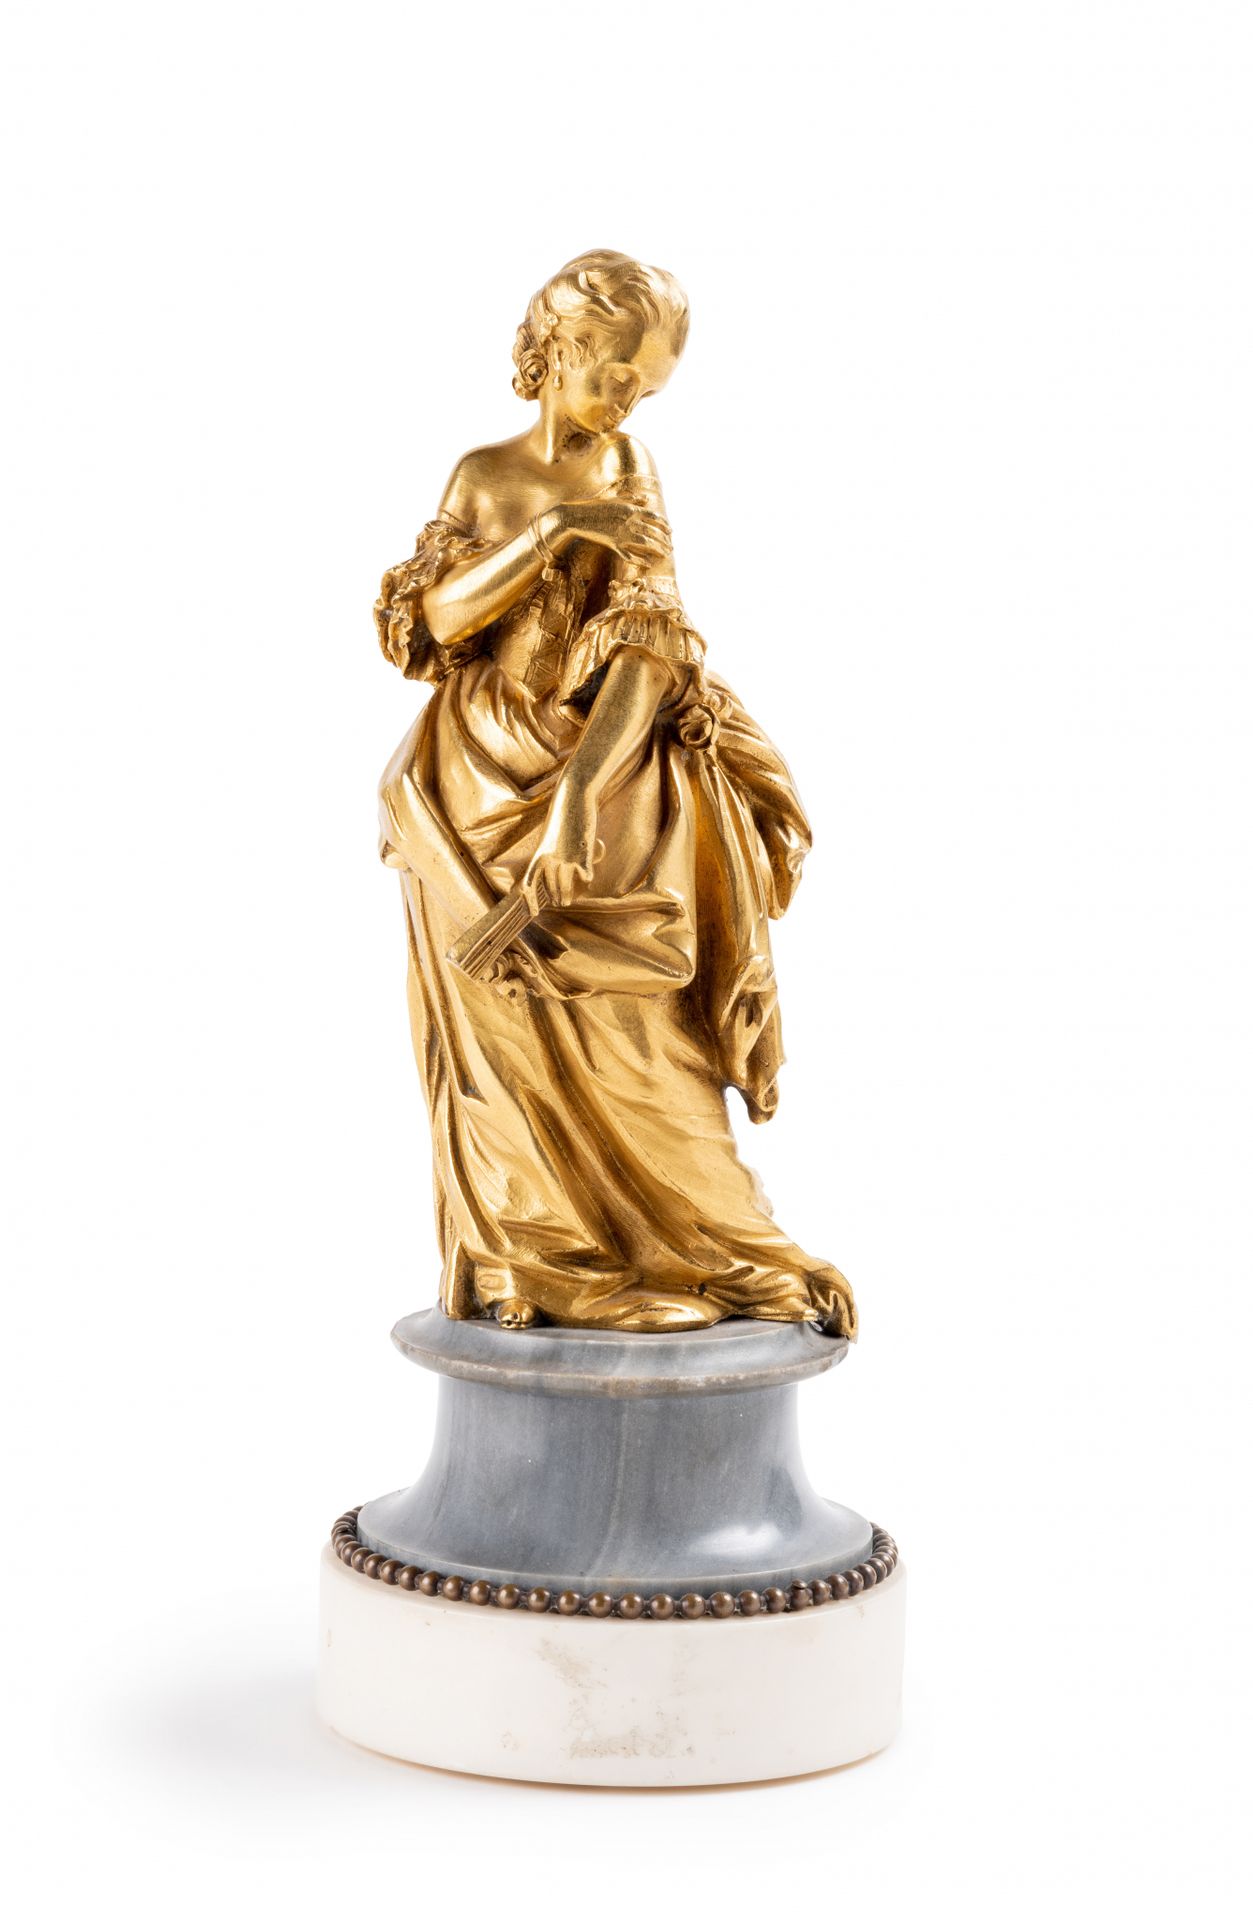 Statuette d'élégante 手持扇子的青铜凿刻和镀金铜器

绿松石大理石底座和白色大理石柜台底座。

19世纪

高度：28厘米